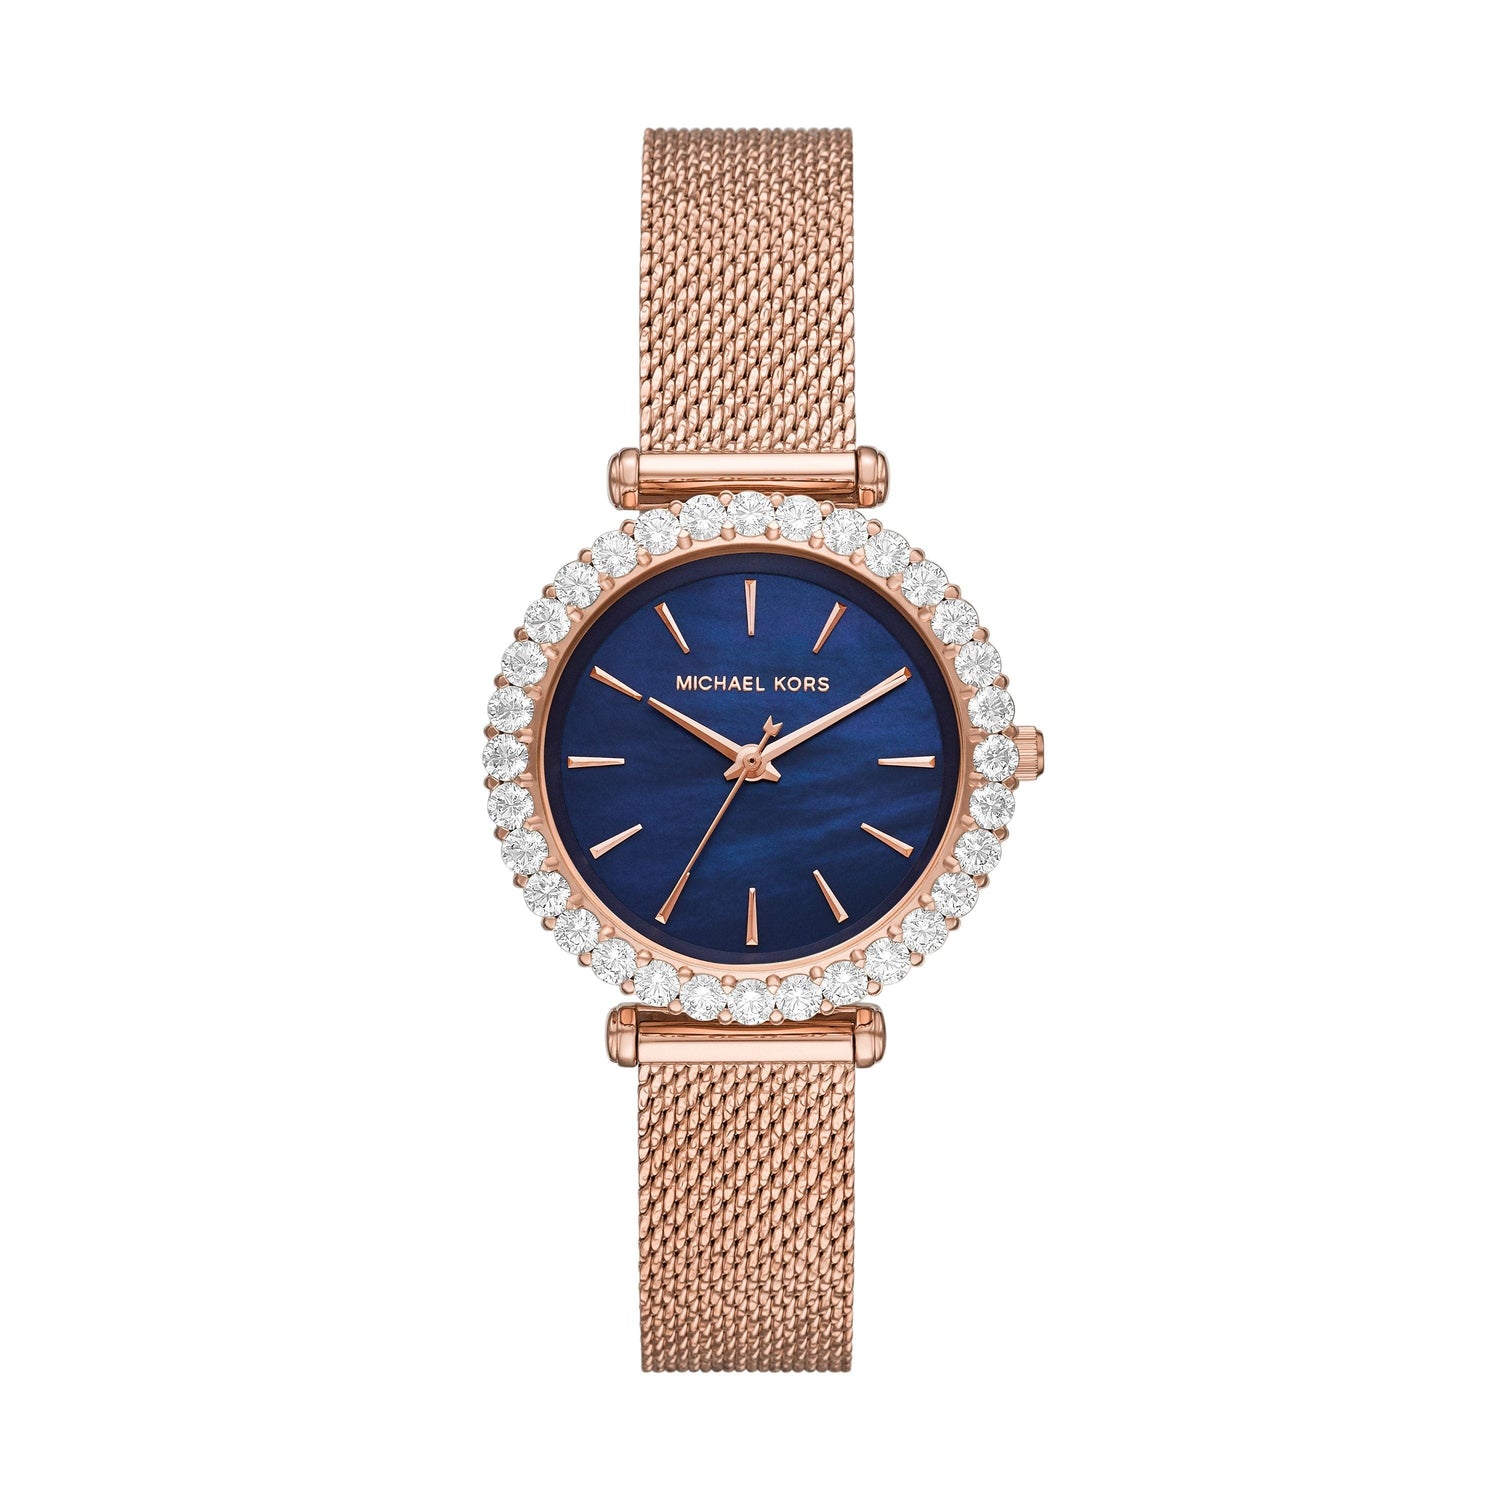 Michael Kors Darci Blue and Gold Women's Watch MK4630 Watches Michael Kors 